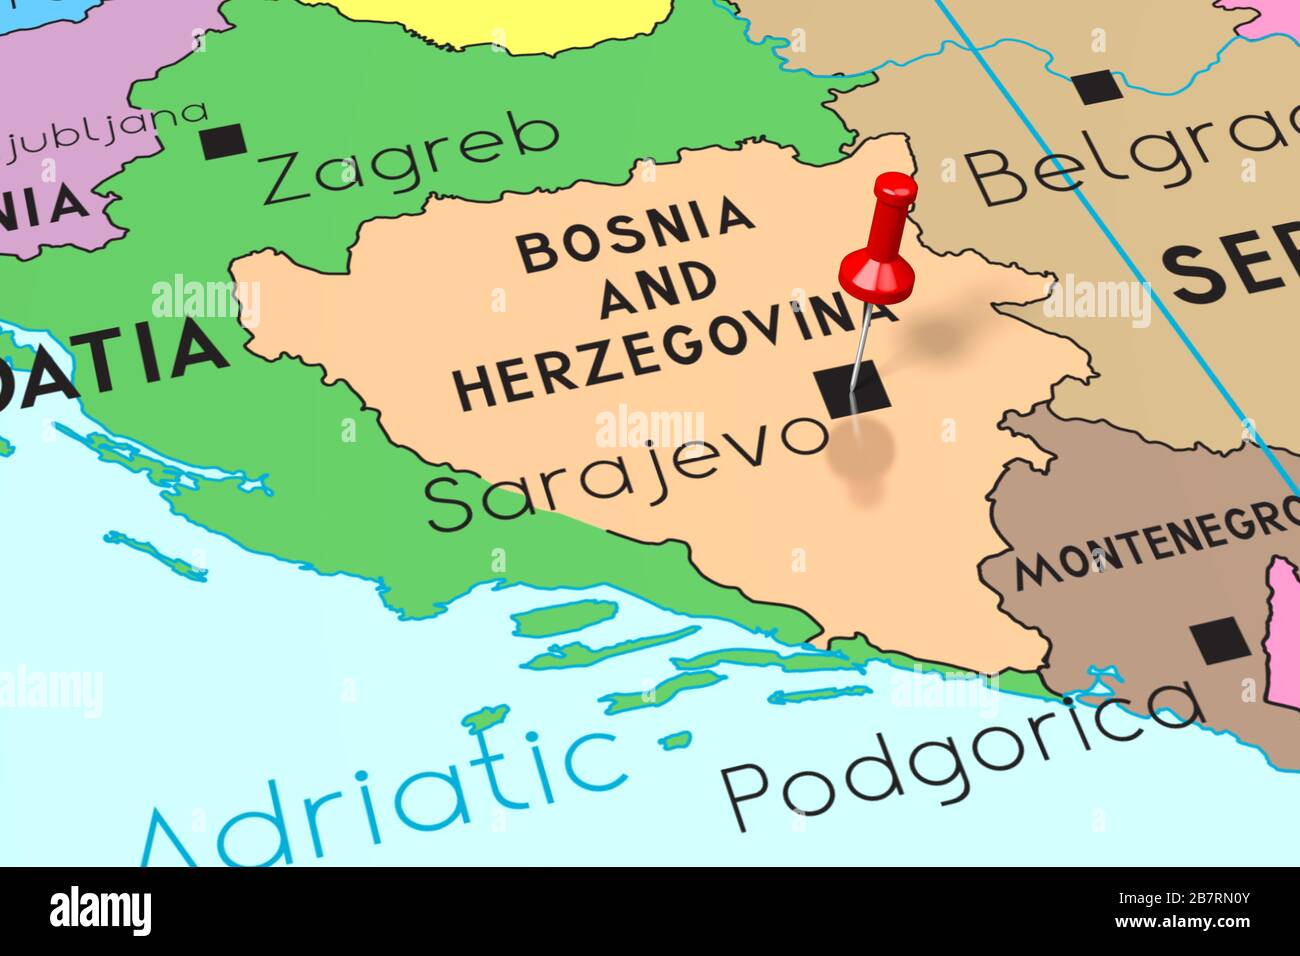 Bosnia and Herzegovina, Sarajevo - capital city, pinned on political map Stock Photo